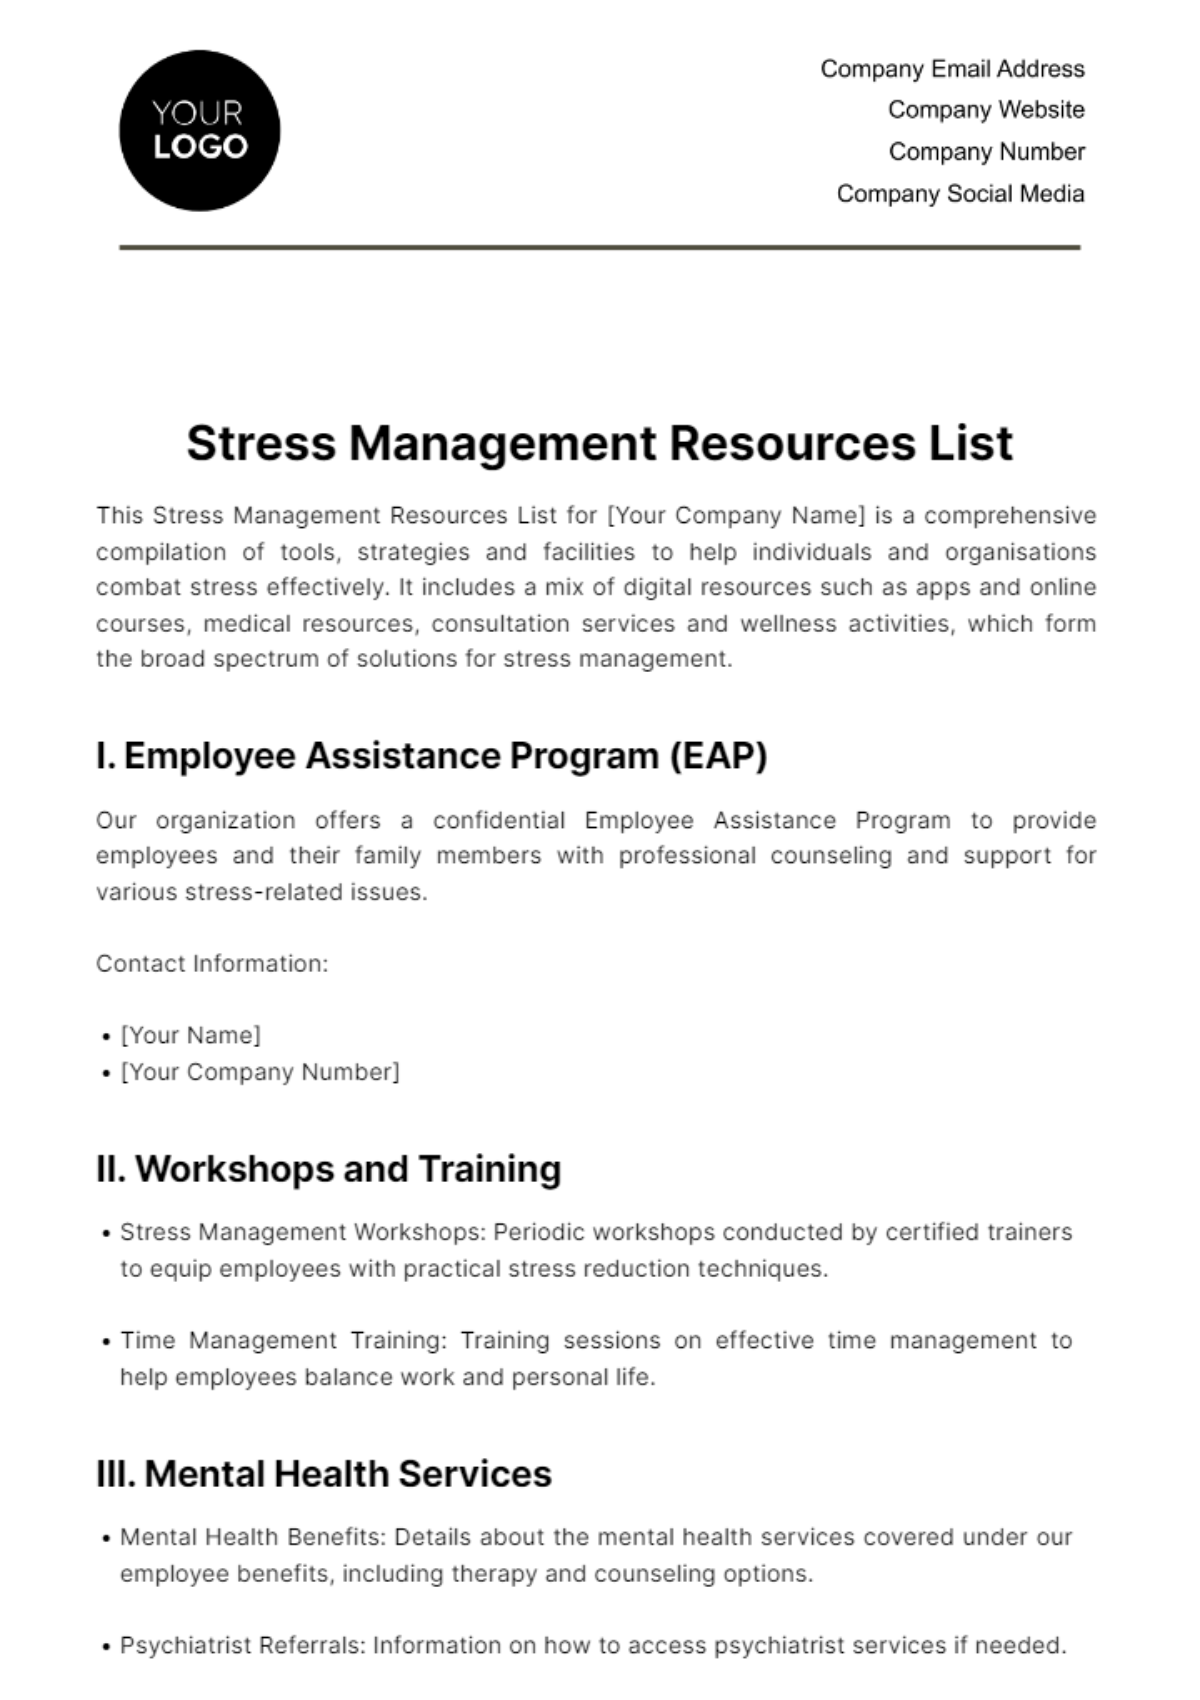 Stress Management Resources List HR Template